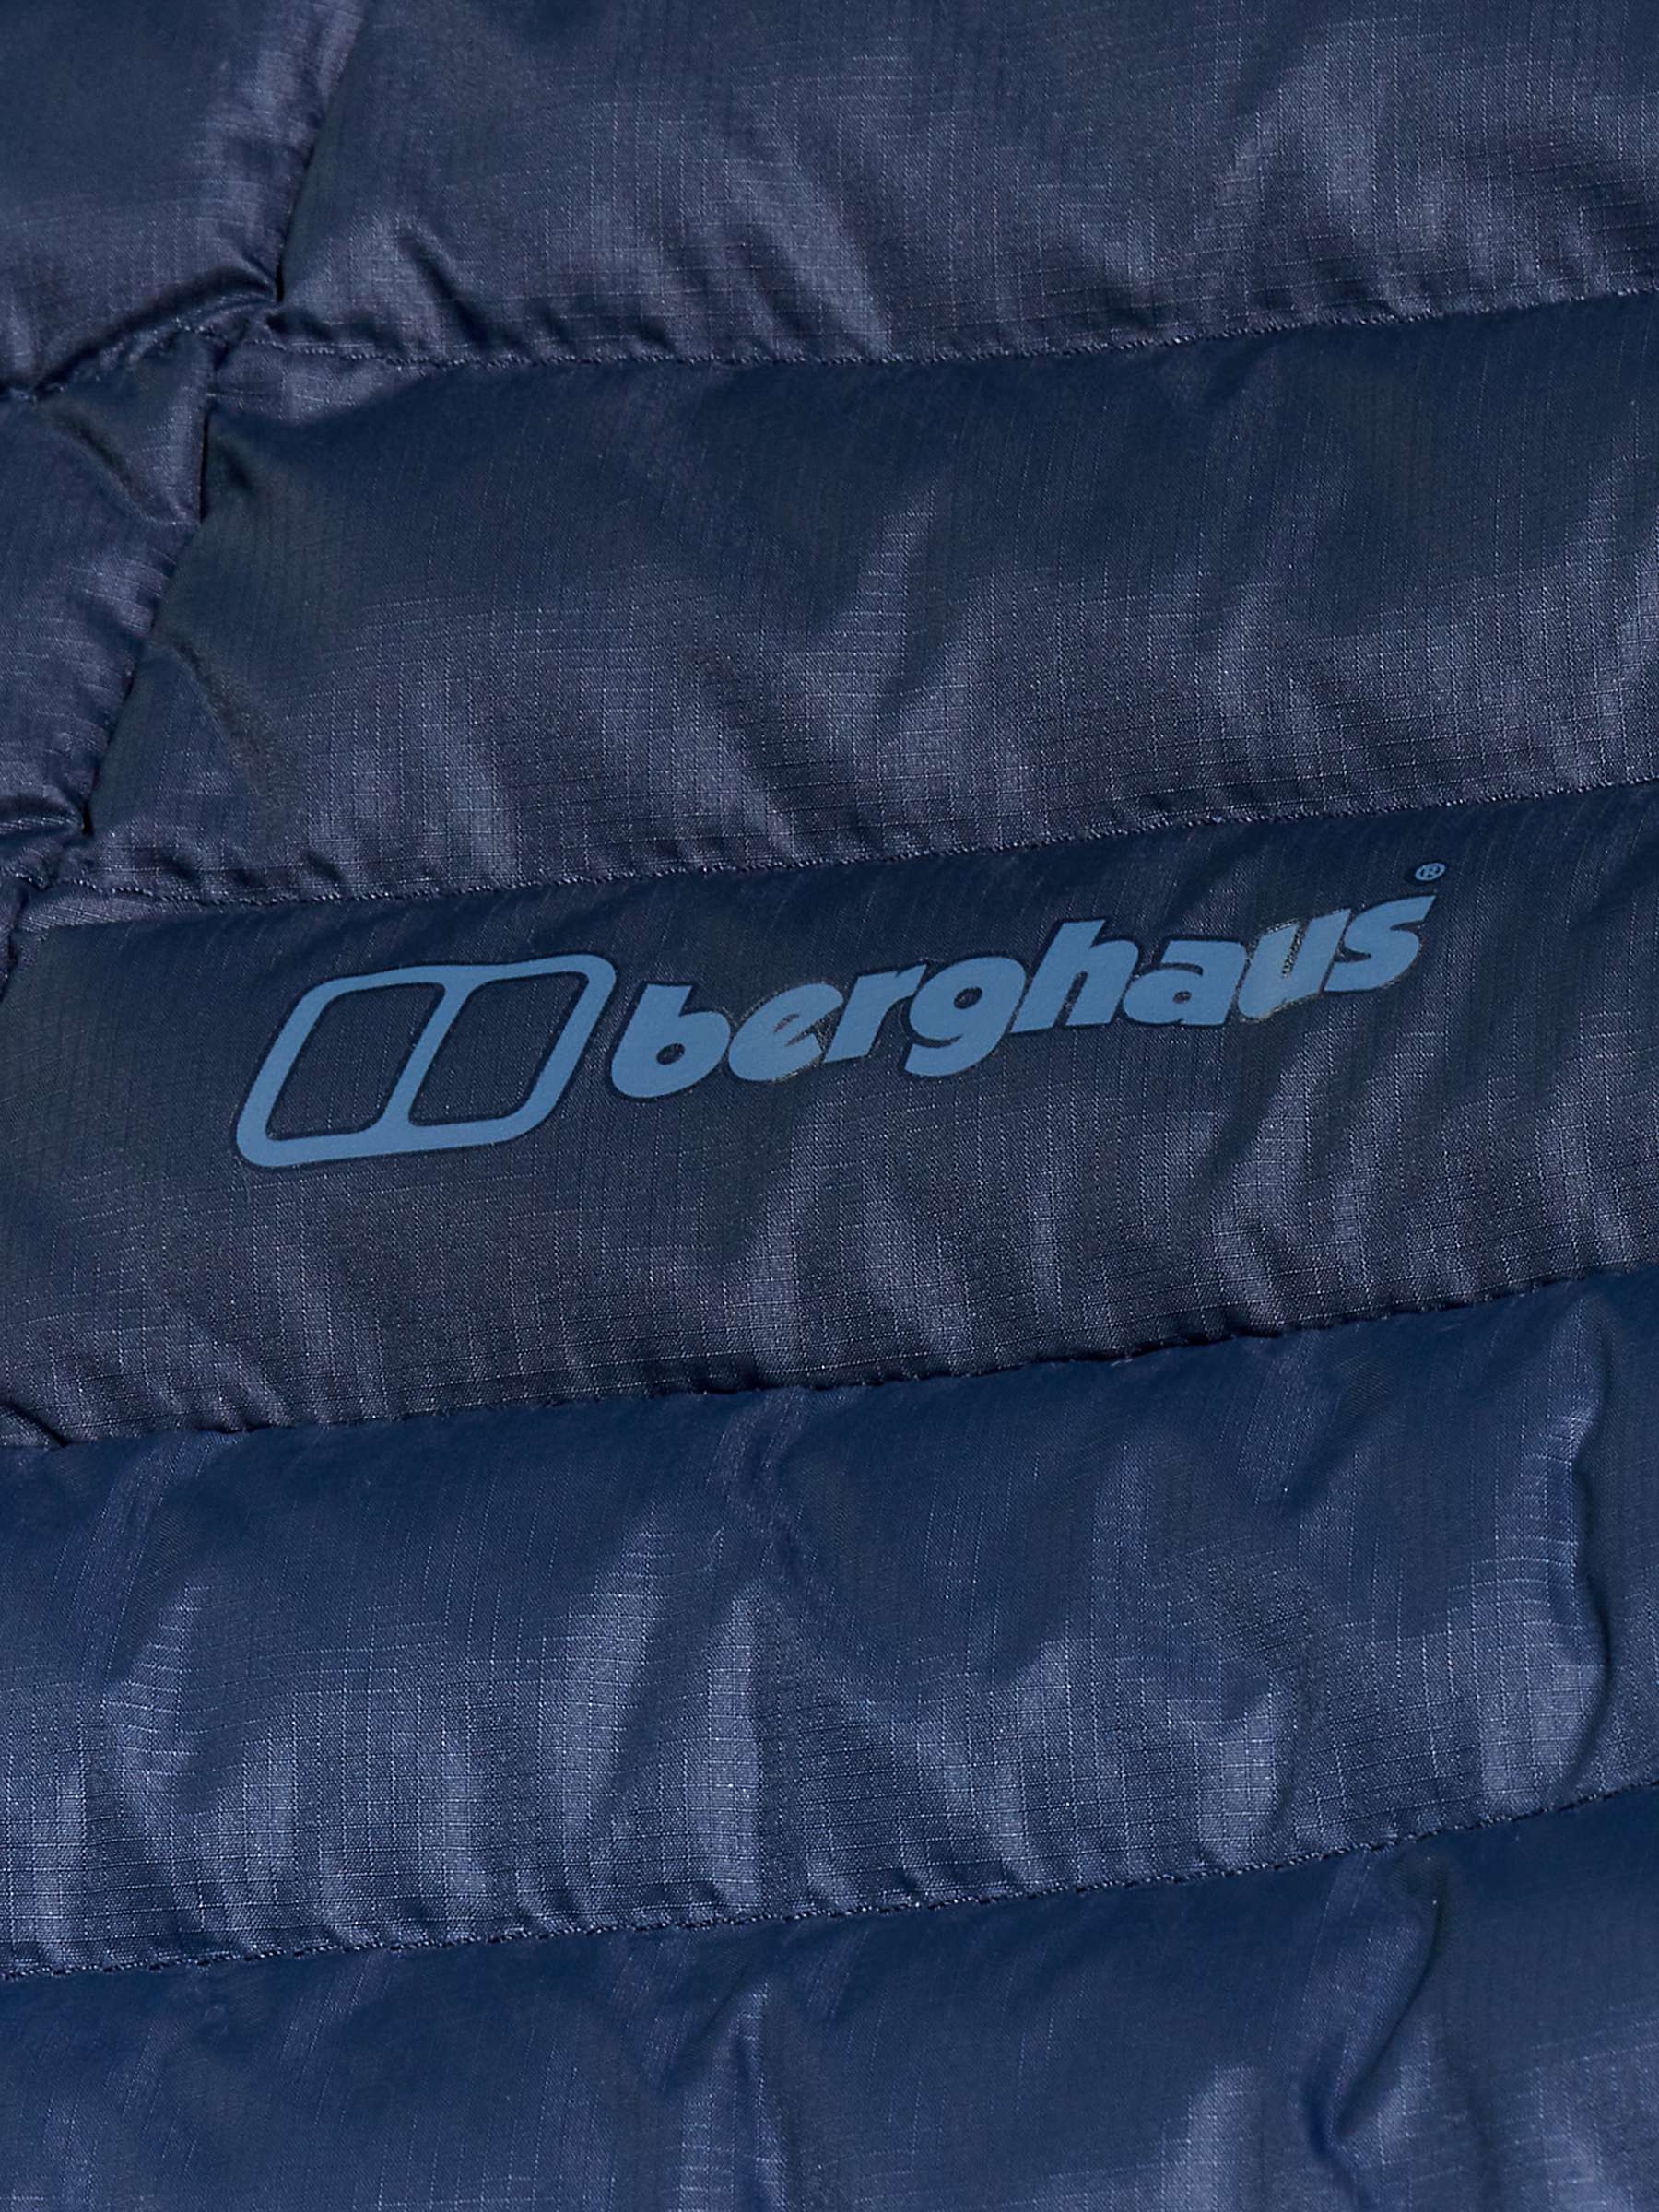 Buy Berghaus Vaskye Men's Insulated Jacket Online at johnlewis.com